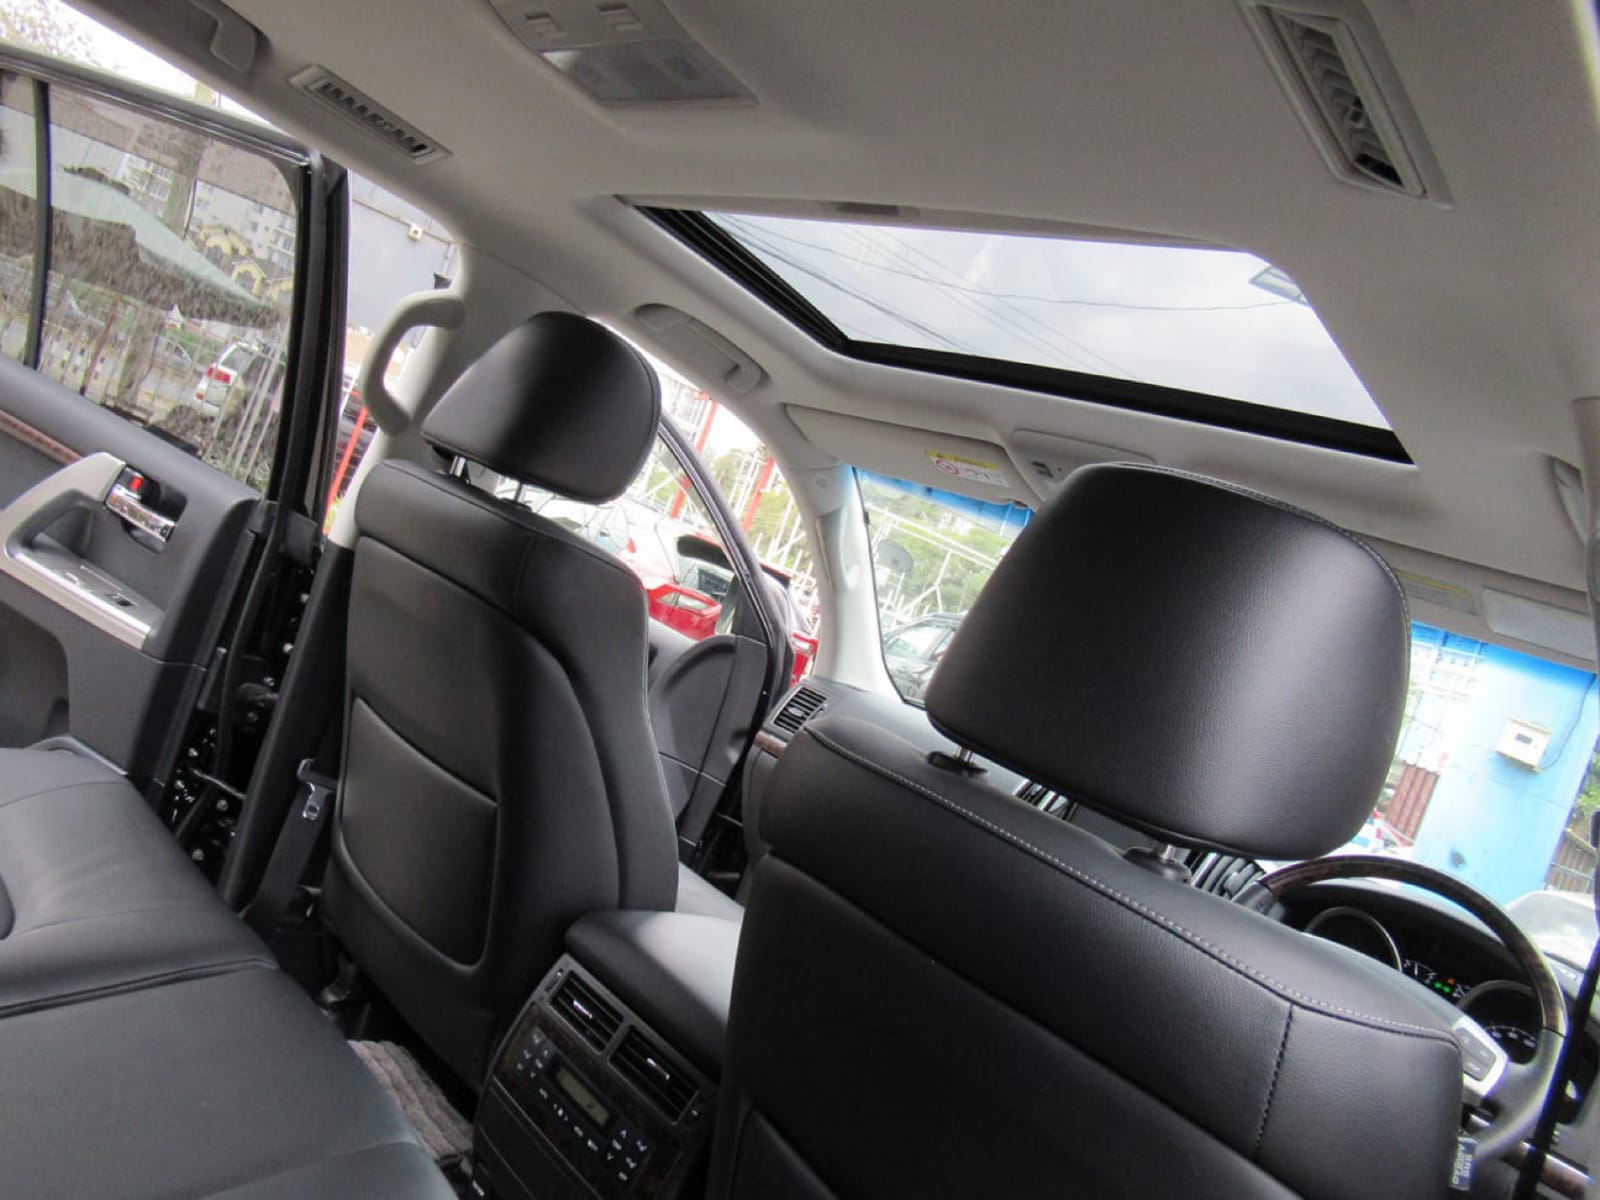 Toyota Land cruiser V8 2015 Hot Deal black sunroof dark leather